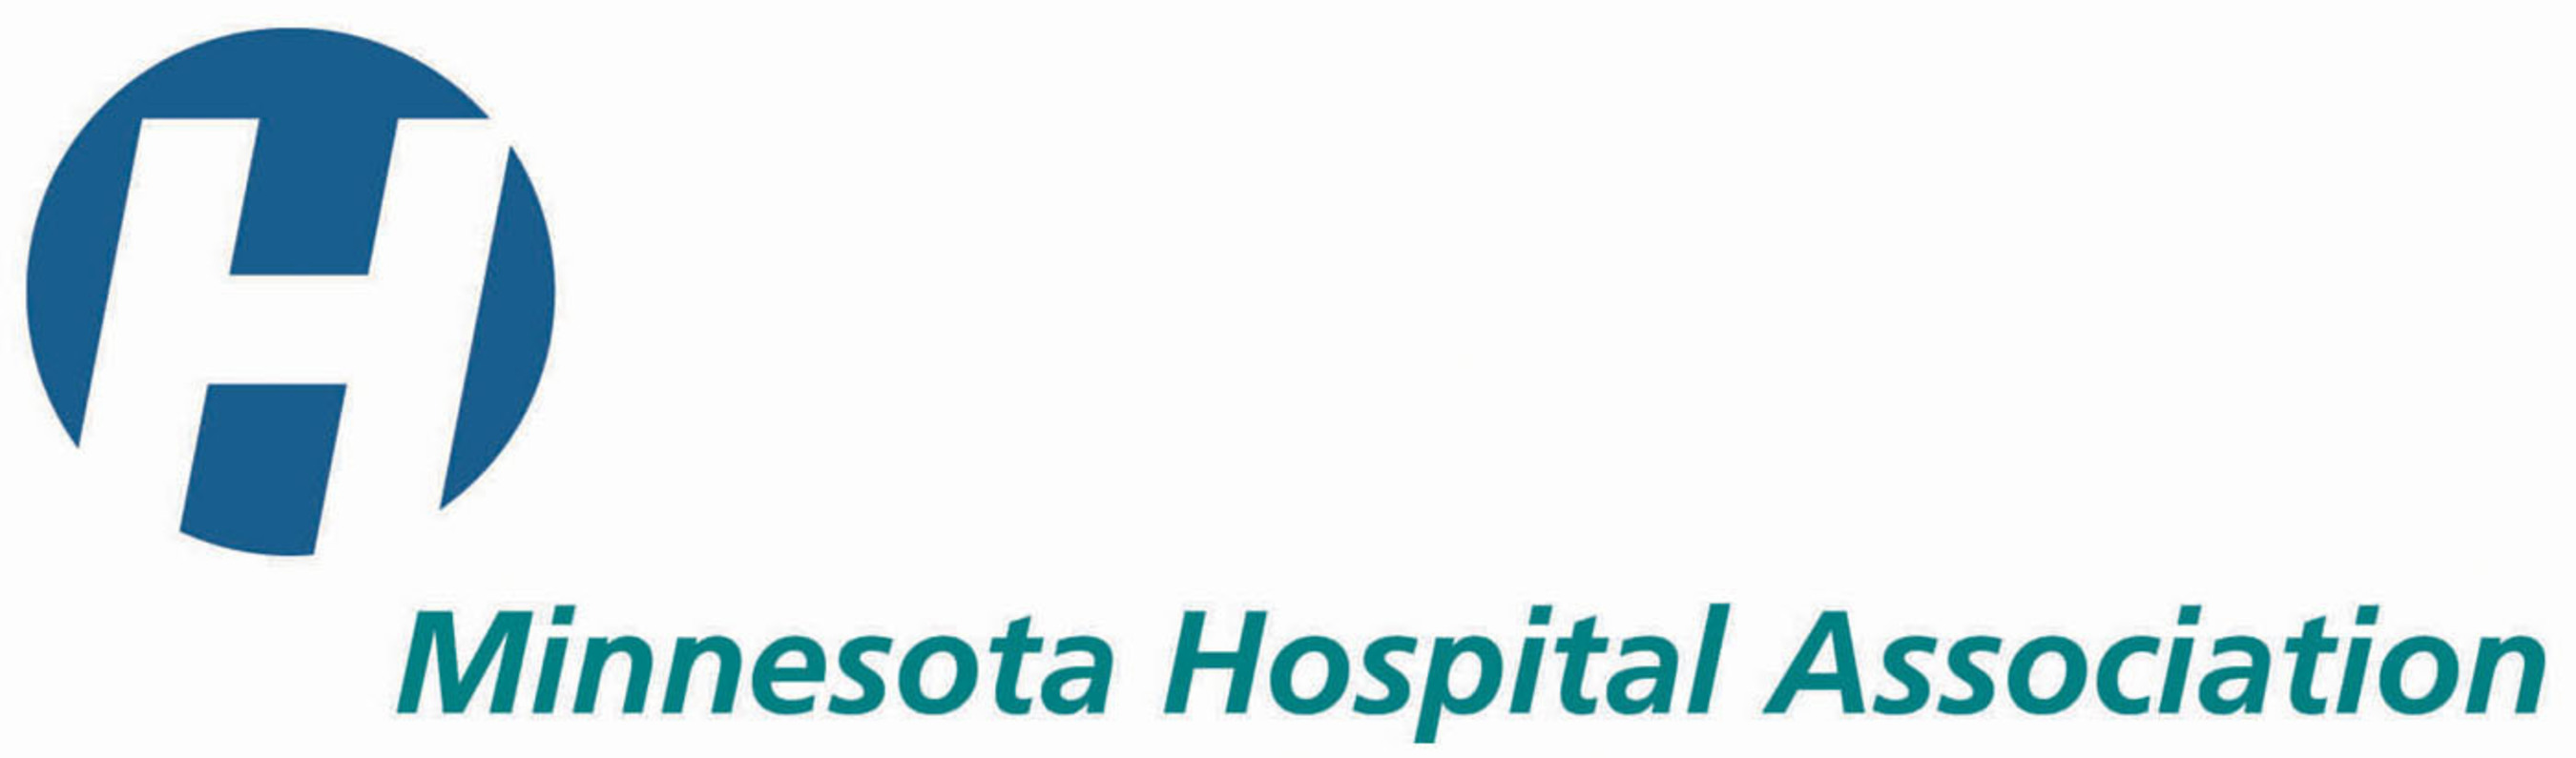 Minnesota Hospital Association logo. (PRNewsFoto/Minnesota Hospital Association)